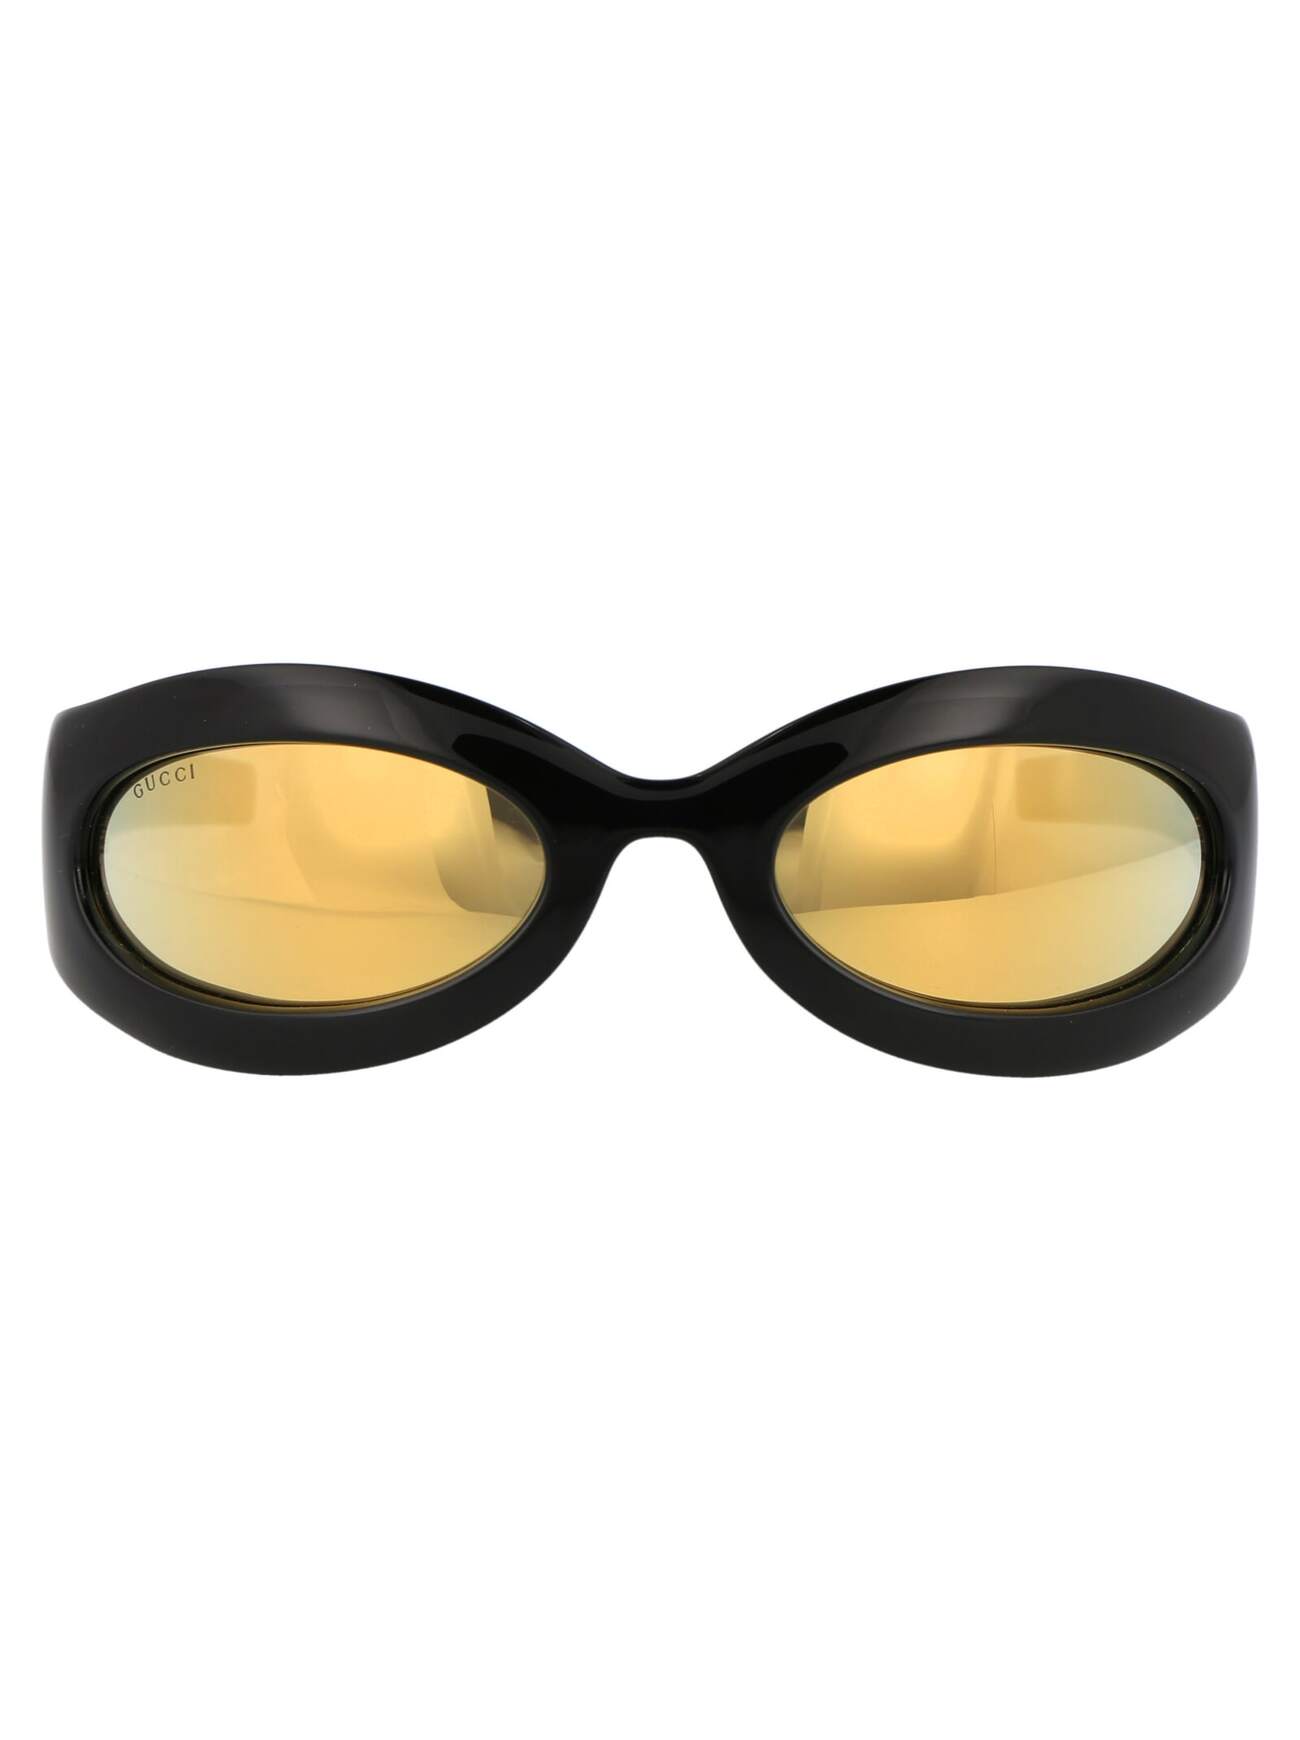 Gucci Eyewear Gg1247s Sunglasses in black / gold